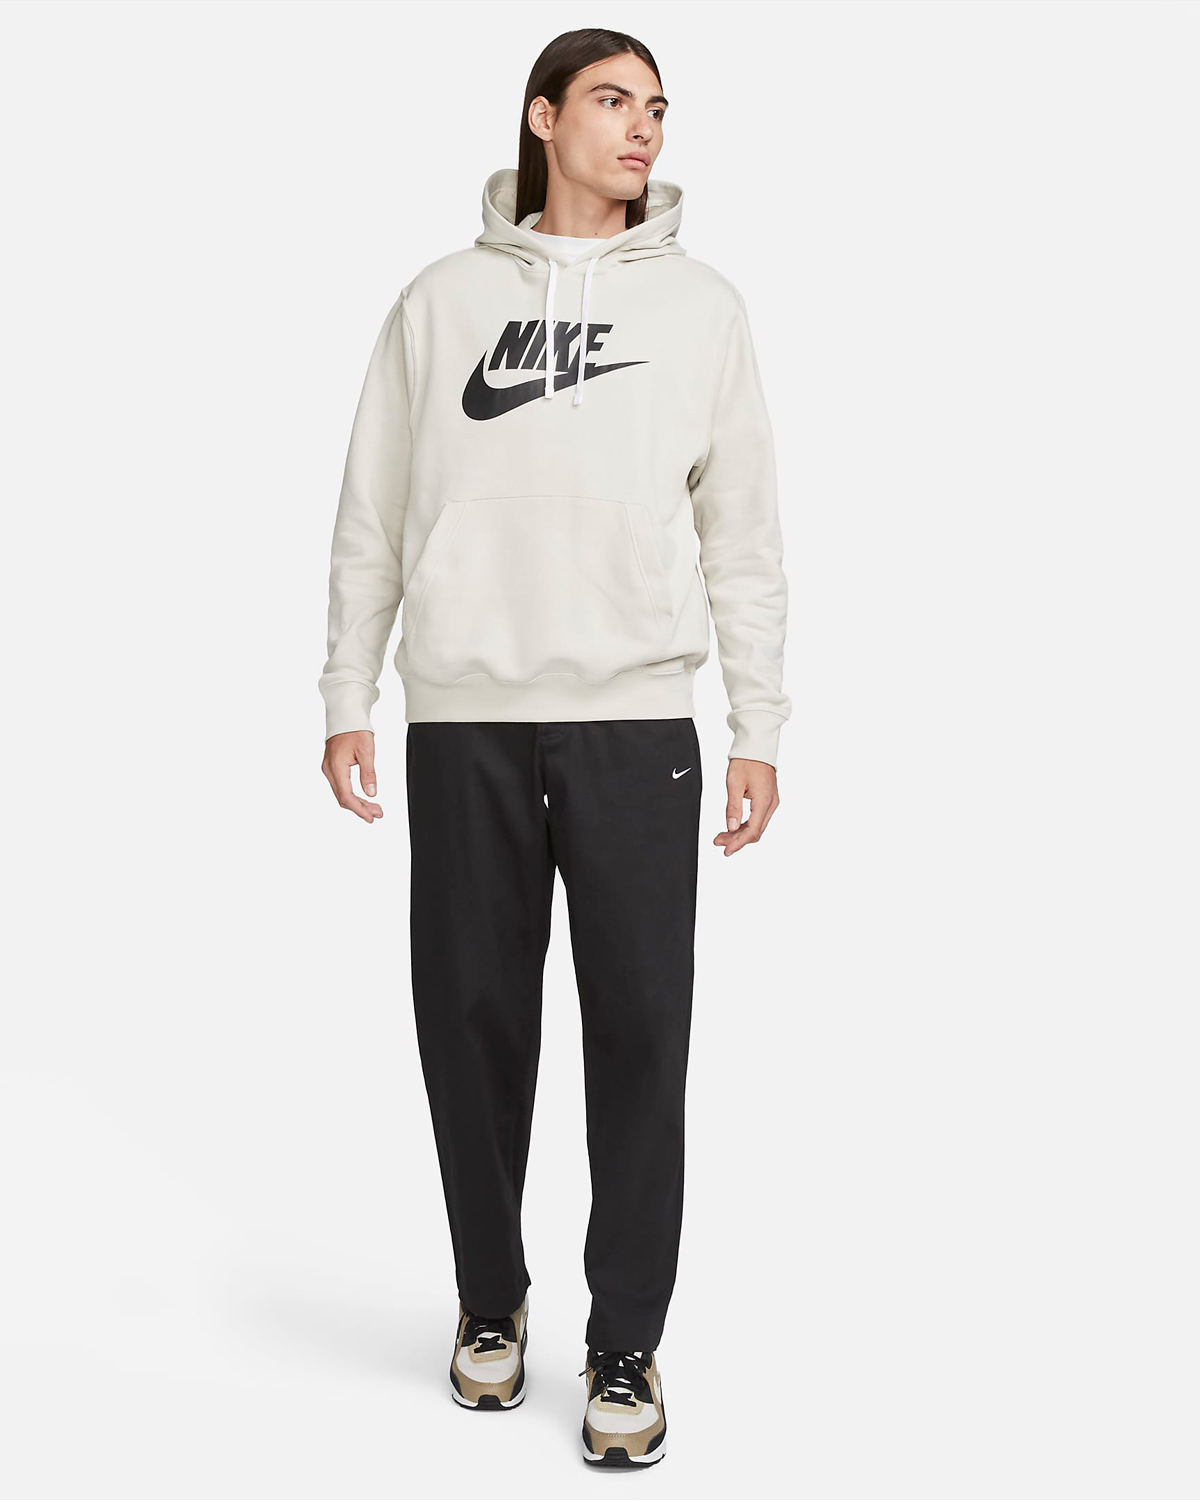 Nike-Club-Fleece-Graphic-Hoodie-Light-Bone-Outfit